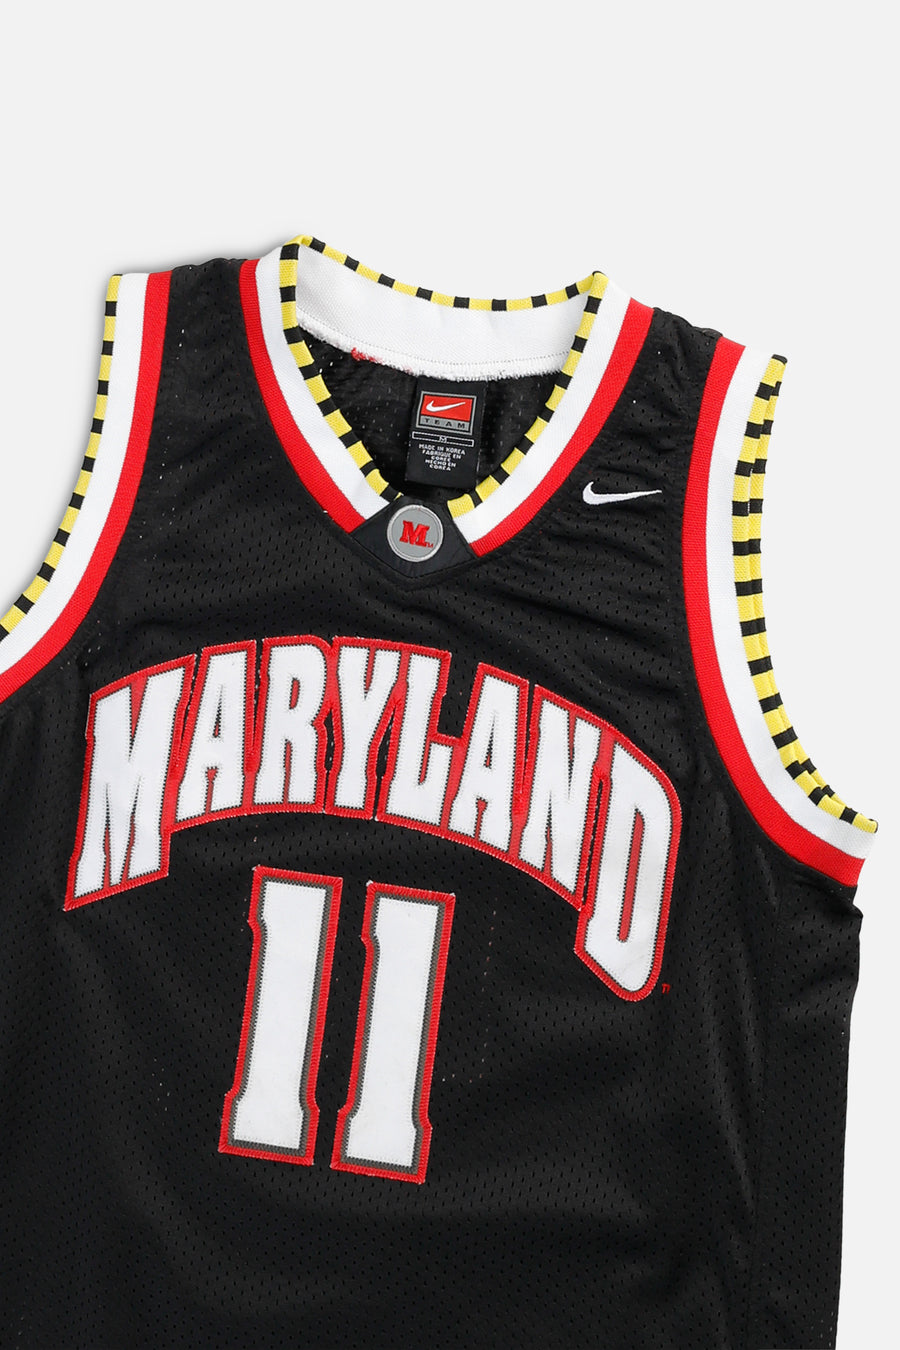 Vintage Maryland Basketball Jersey - Women's S